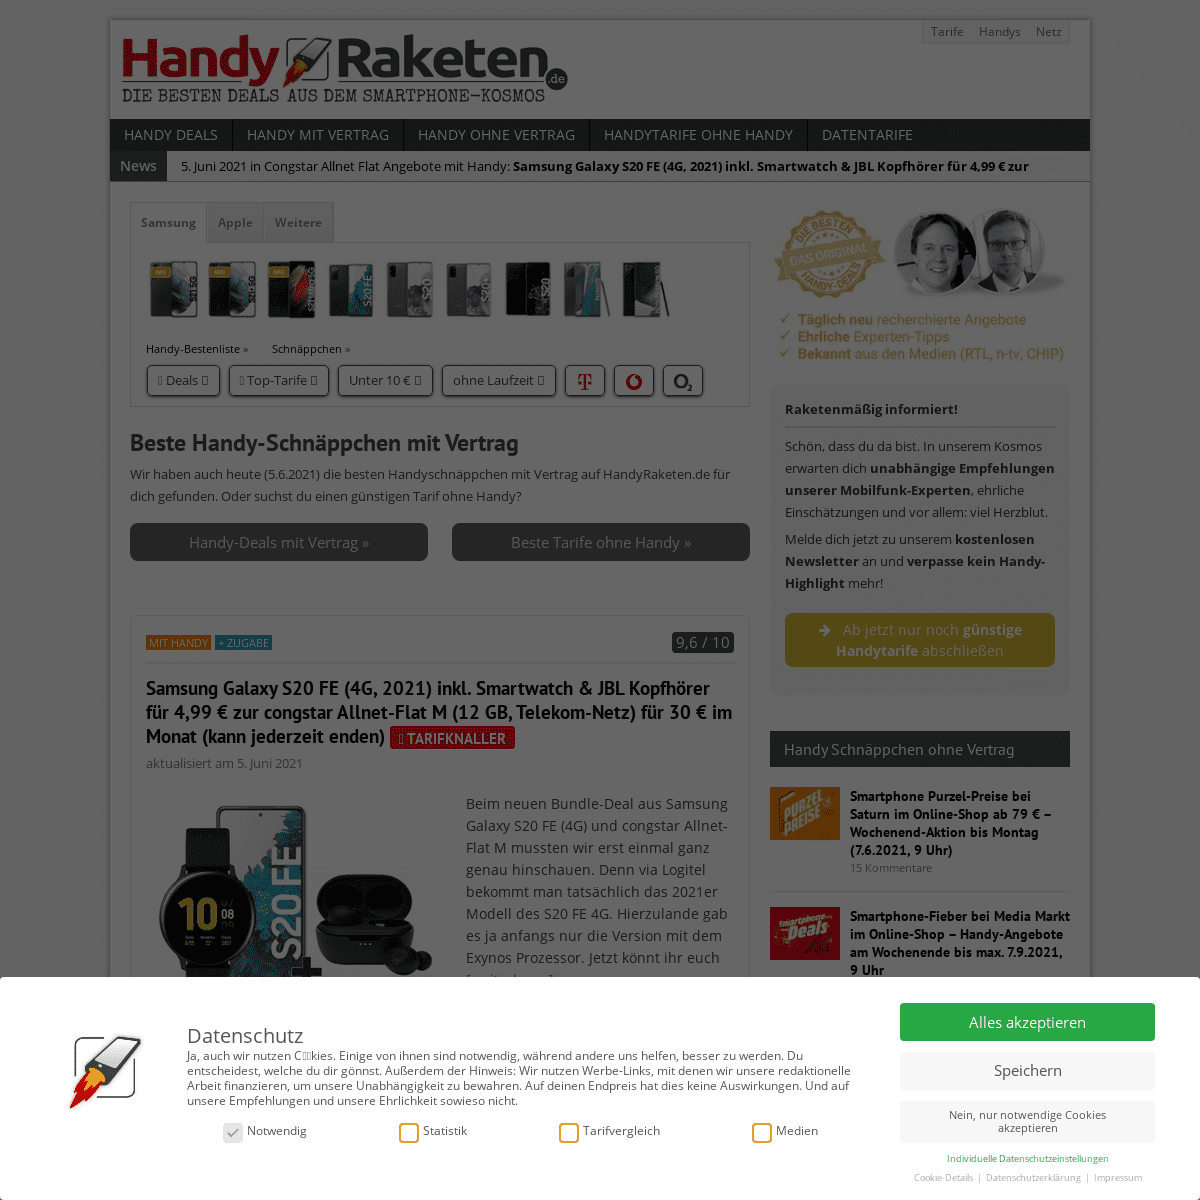 A complete backup of https://handyraketen.de